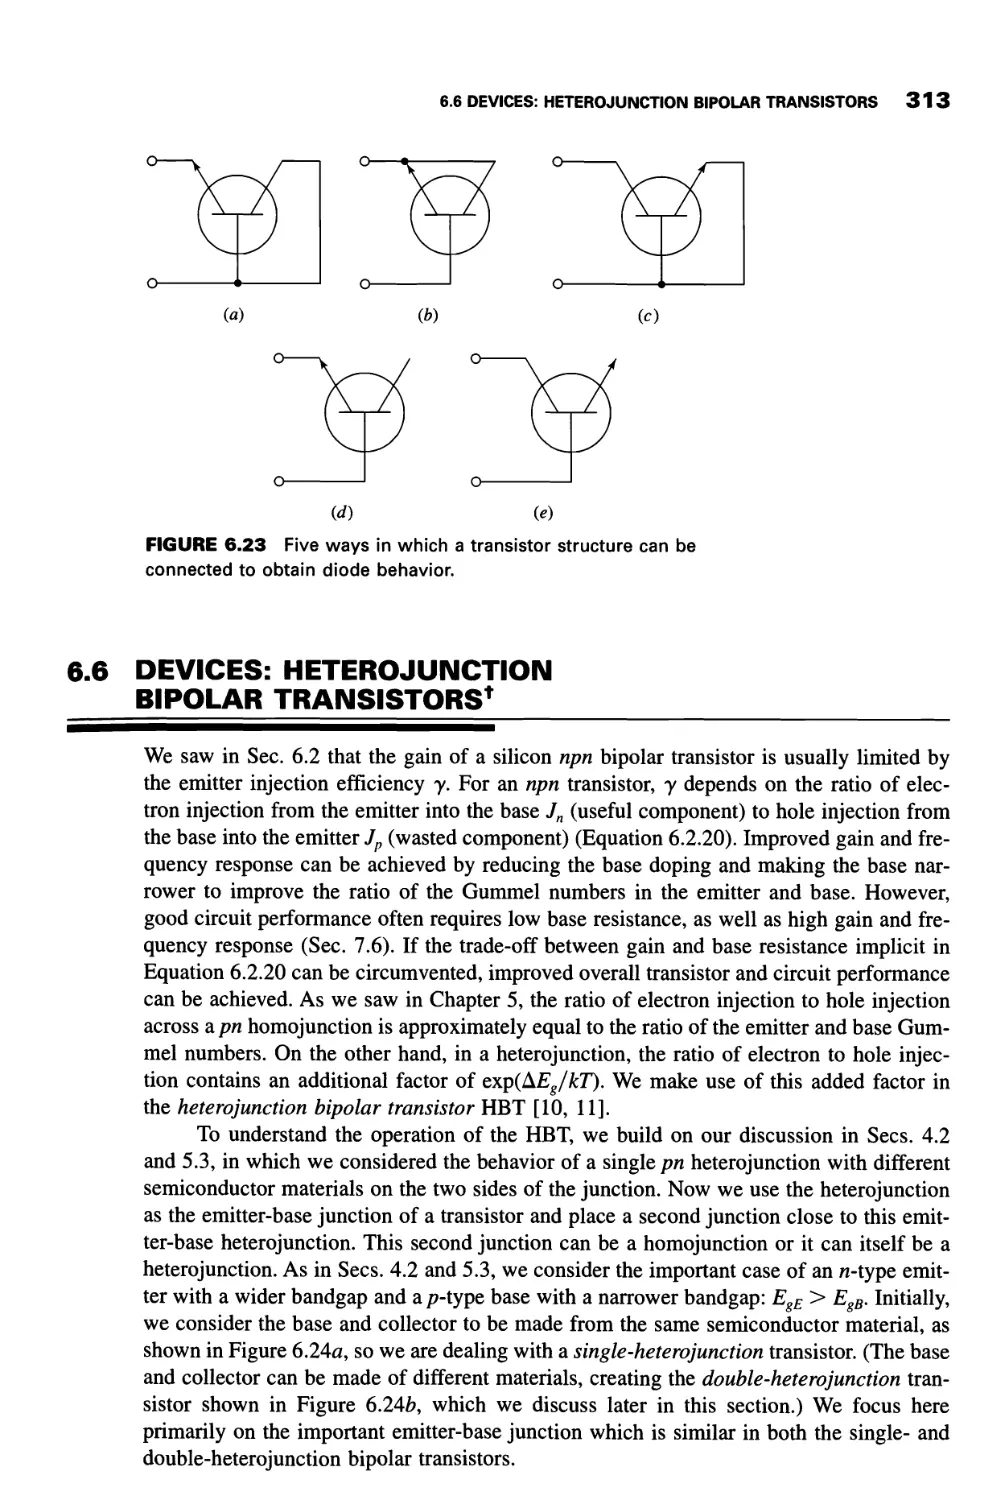 6.6 Devices: Heterojunction Bipolar Transistors